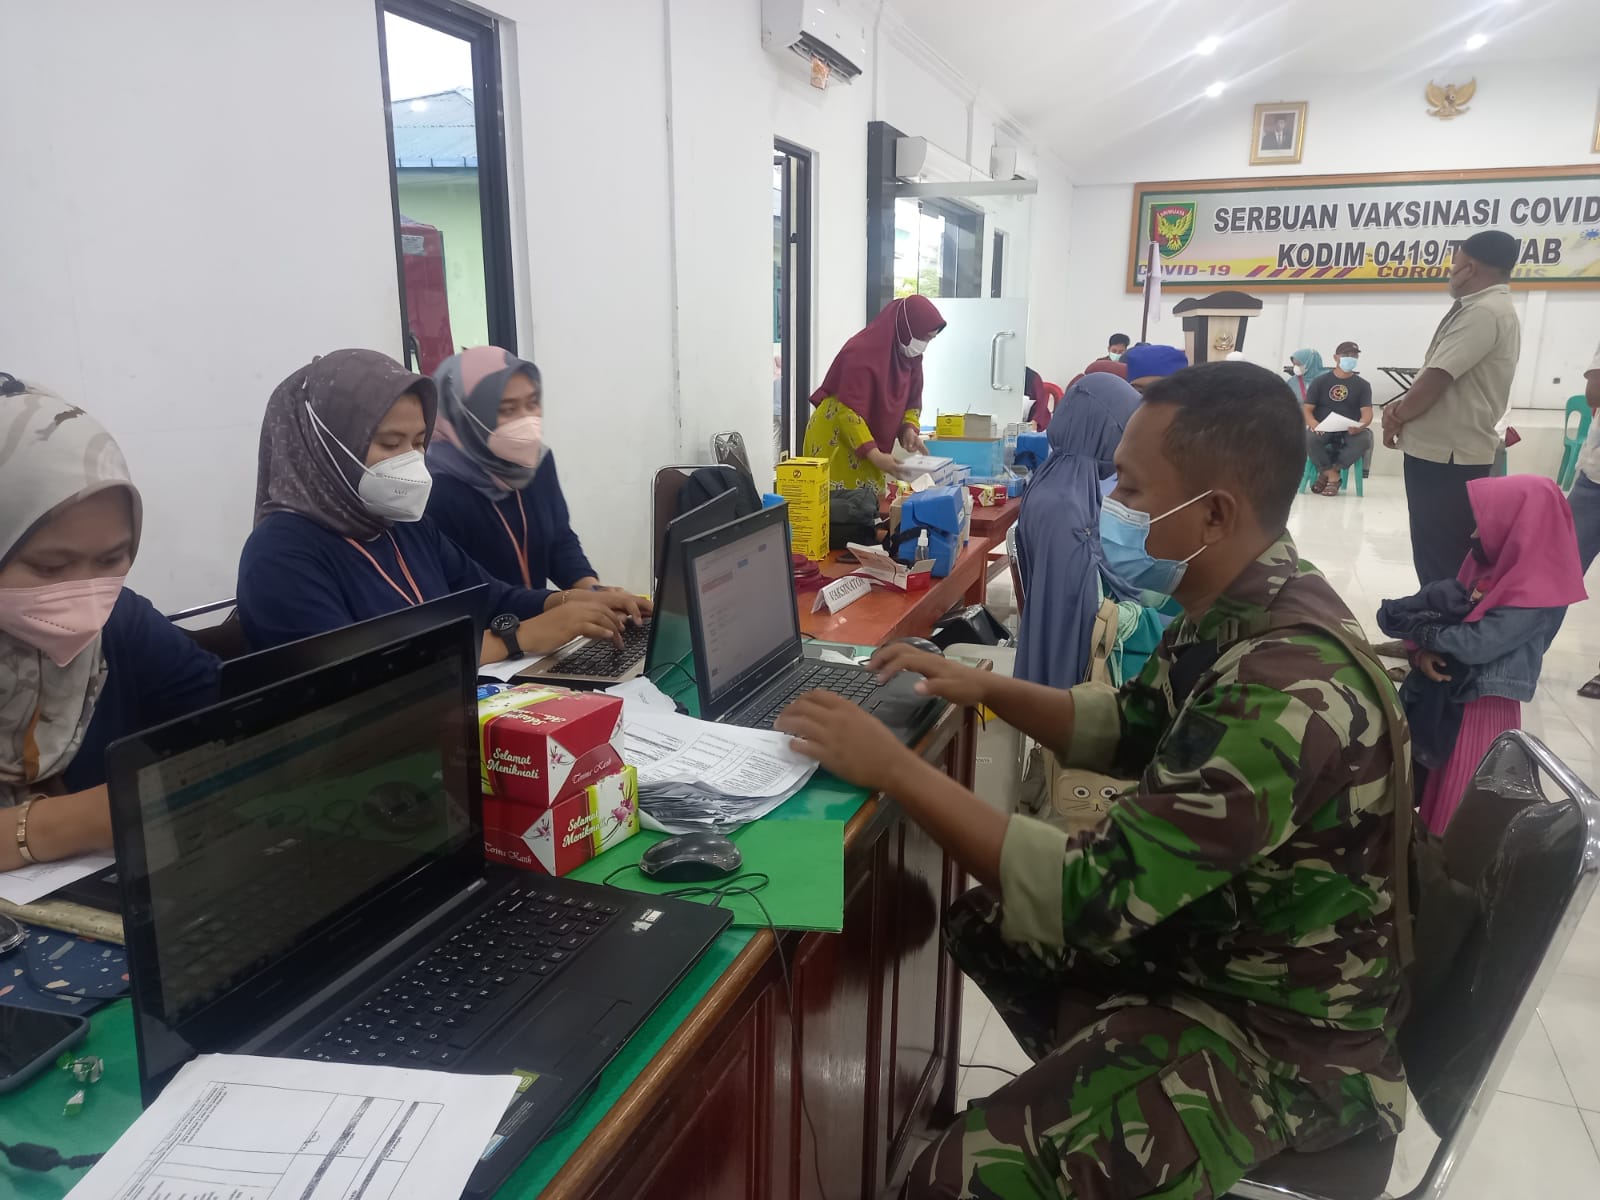 Serbuan Vaksinasi TNI Dosis II di Aula Makodin 0419/Tanjab Berlangsung Aman